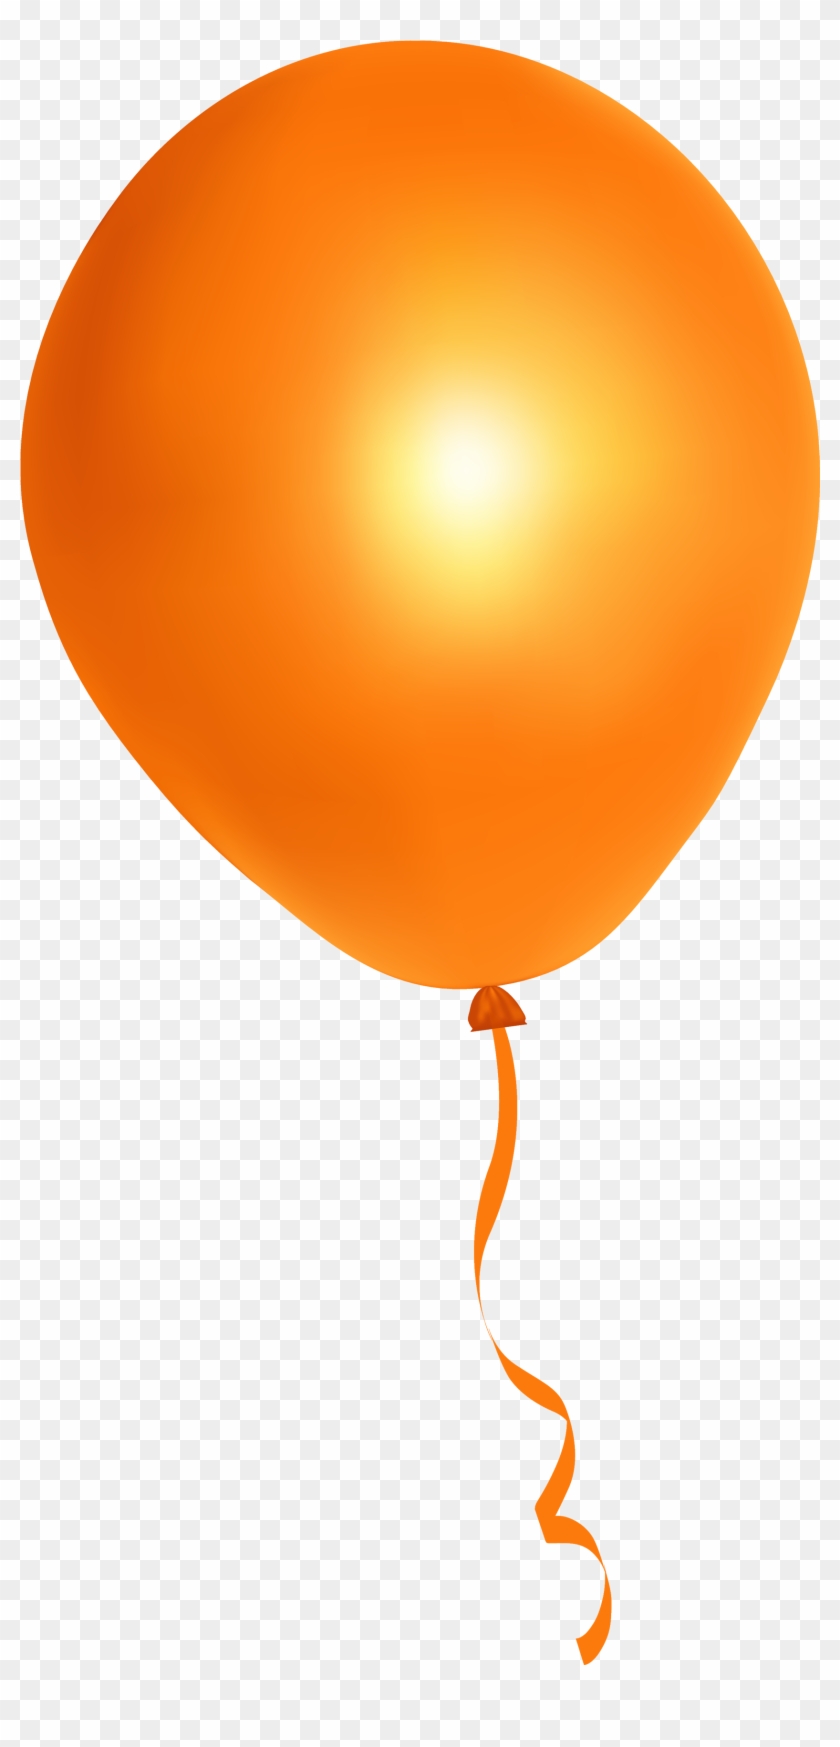 Balloon Png Transparent Balloon Images - Orange Balloon Transparent Background Clipart #51273